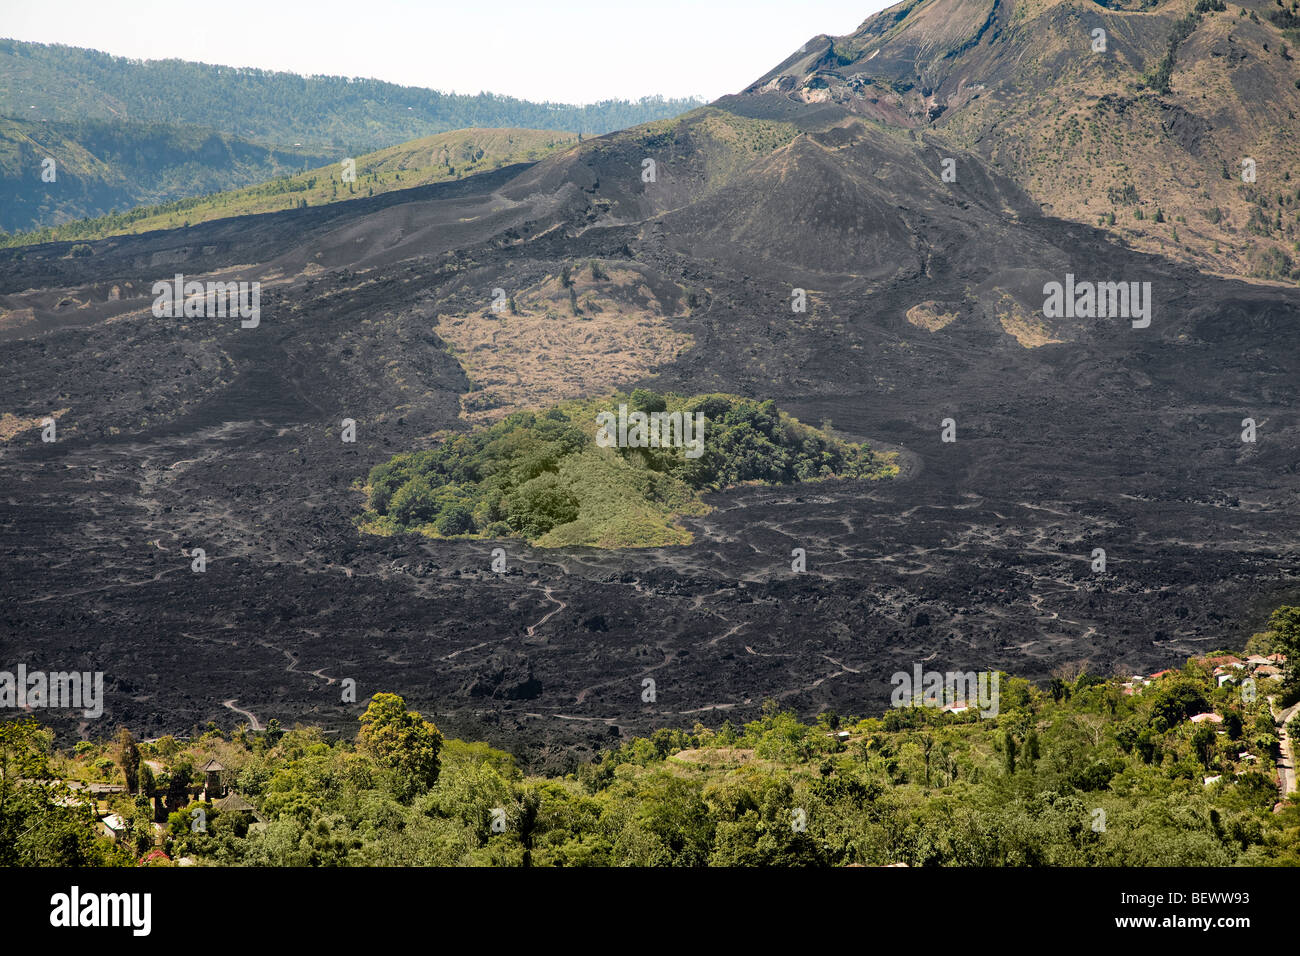 Slopes of Mount Batur (Gunung Batur) showing old solidified lava flow, burnt vegetation, Kintamani, Bali, Indonesia Stock Photo